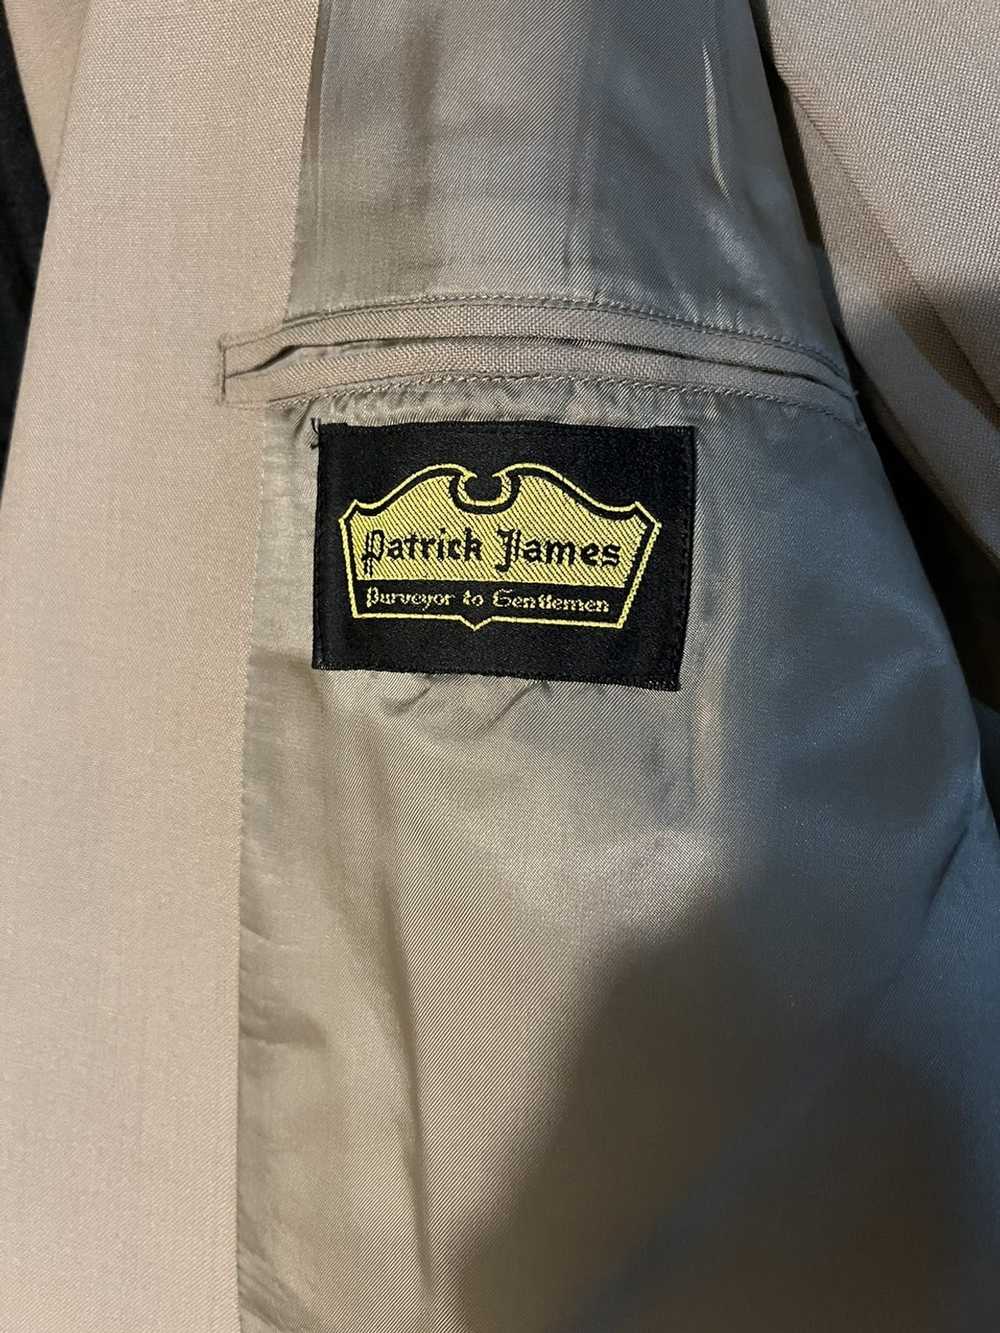 Vintage Patrick James Suit Jacket and Pants - image 4